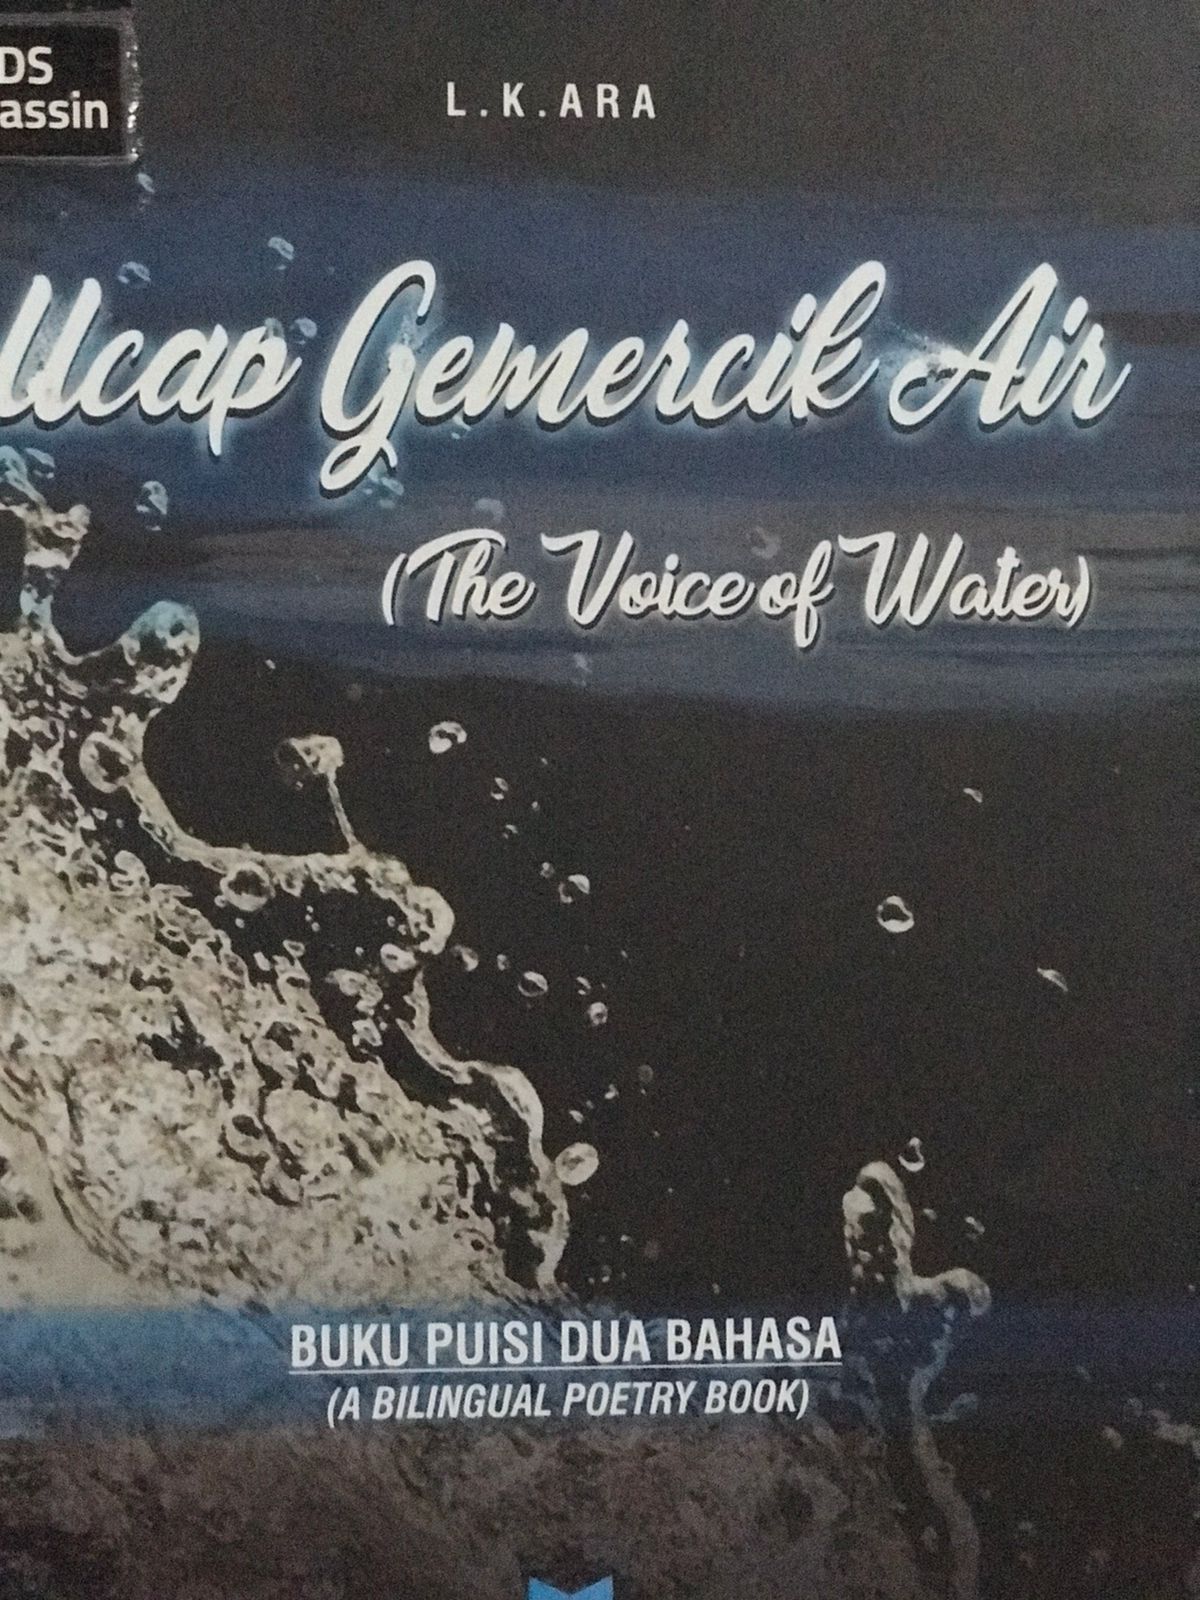 Ucap gemercik air :  The voice of water